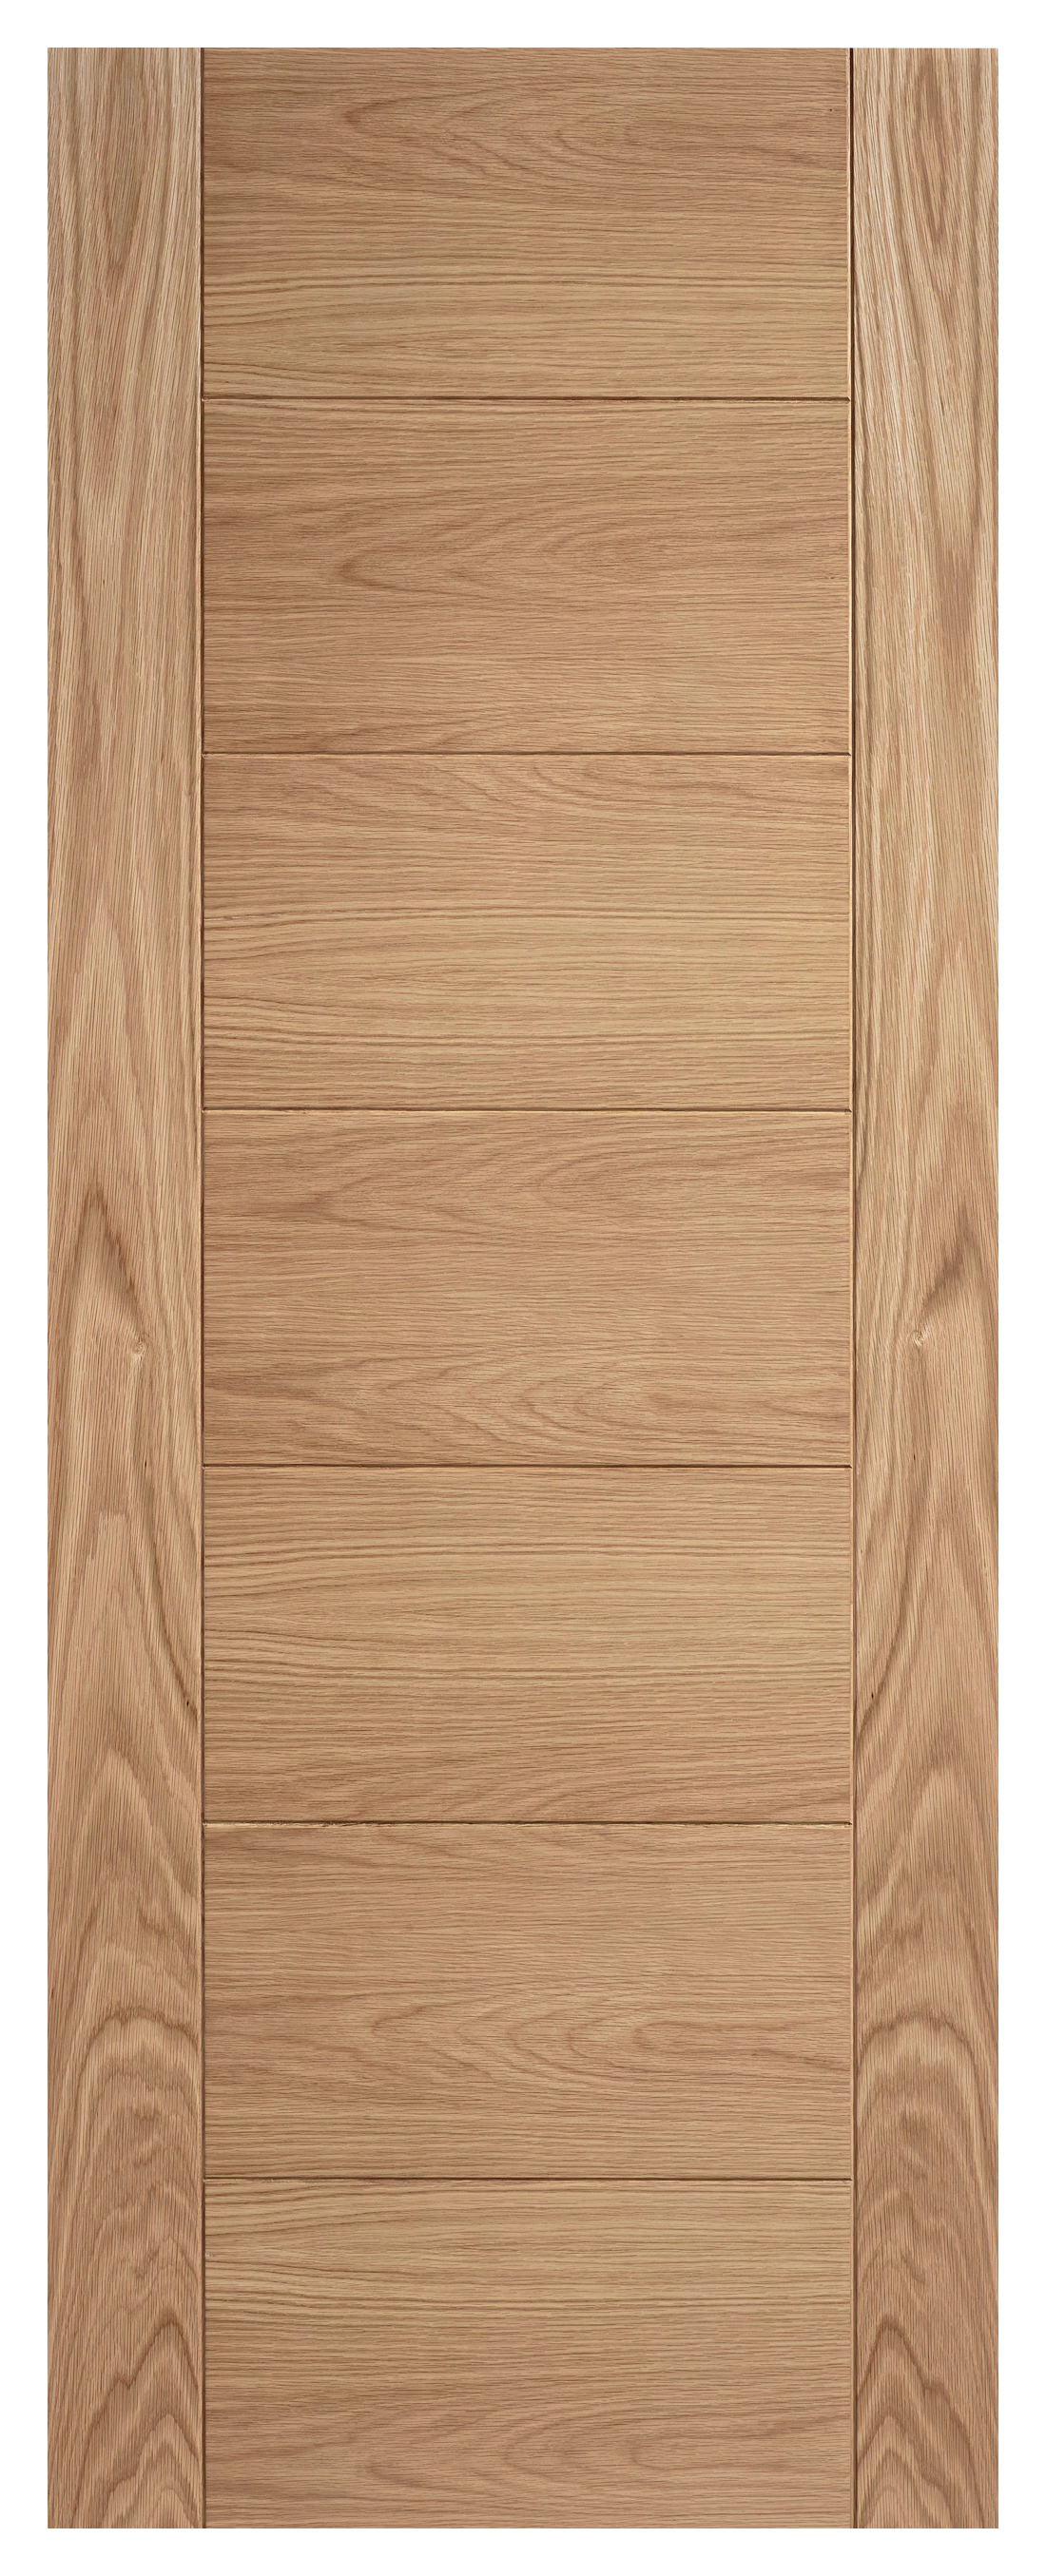 LPD Internal Carini 7 Panel Unfinished Oak Door - 2040mm